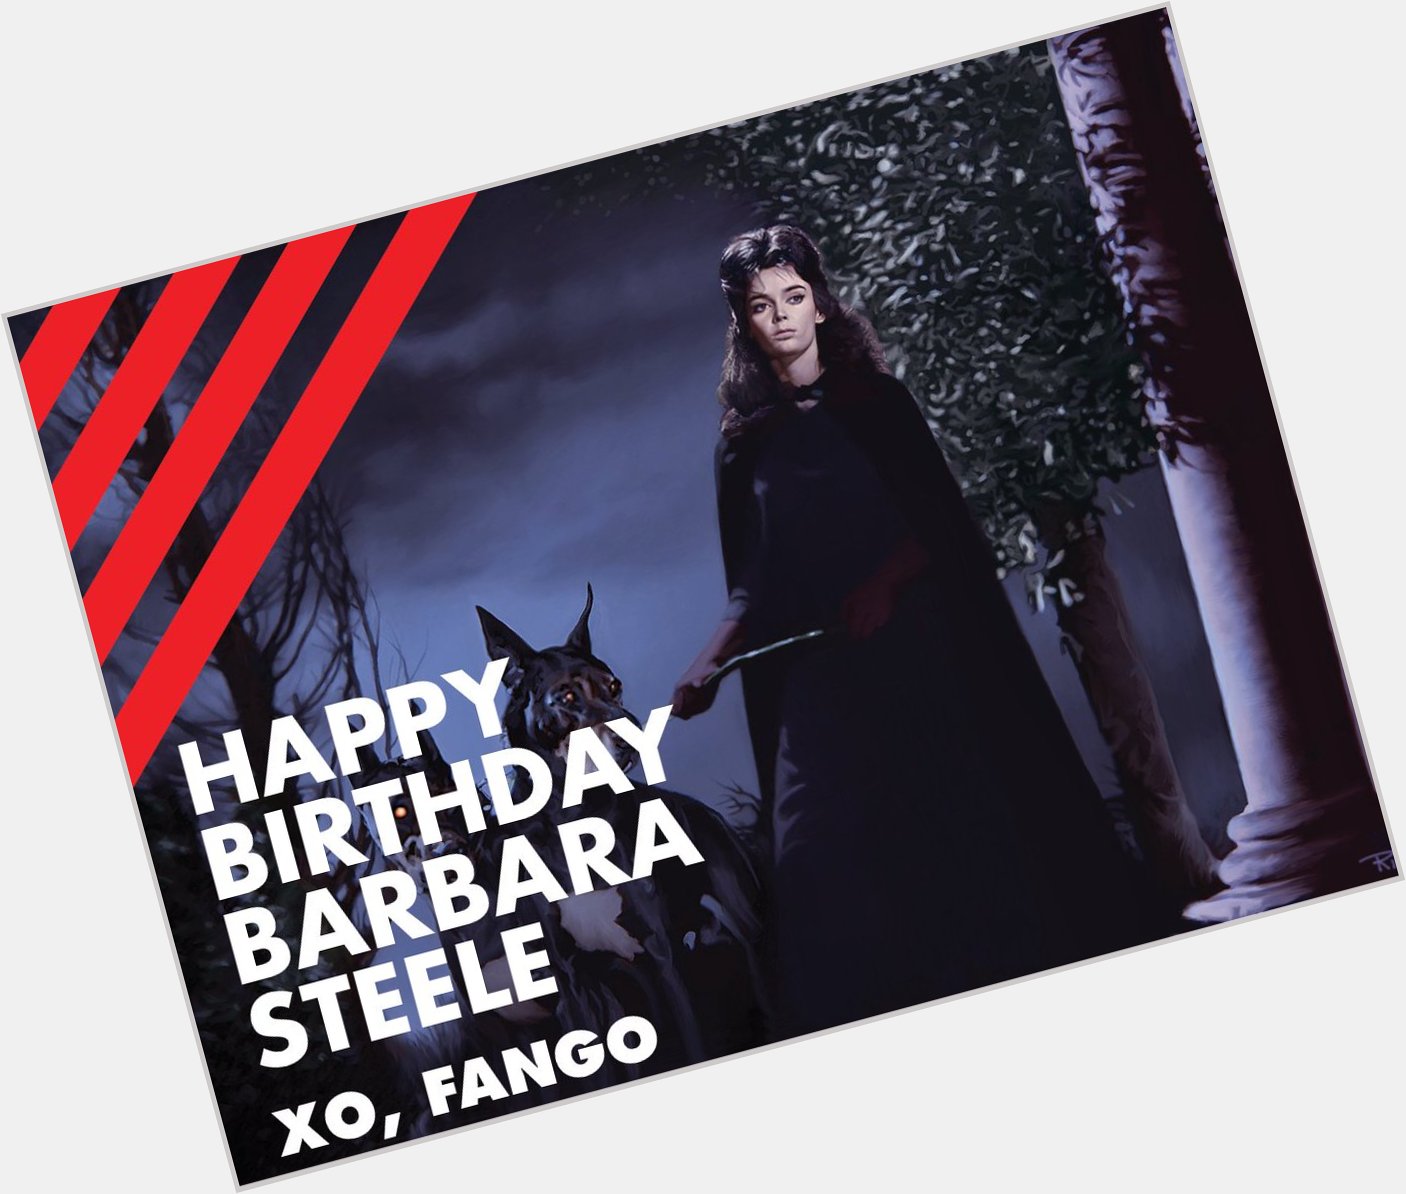 Happy Birthday Barbara Steele! Barbara graced the cover of FANGORIA issue 